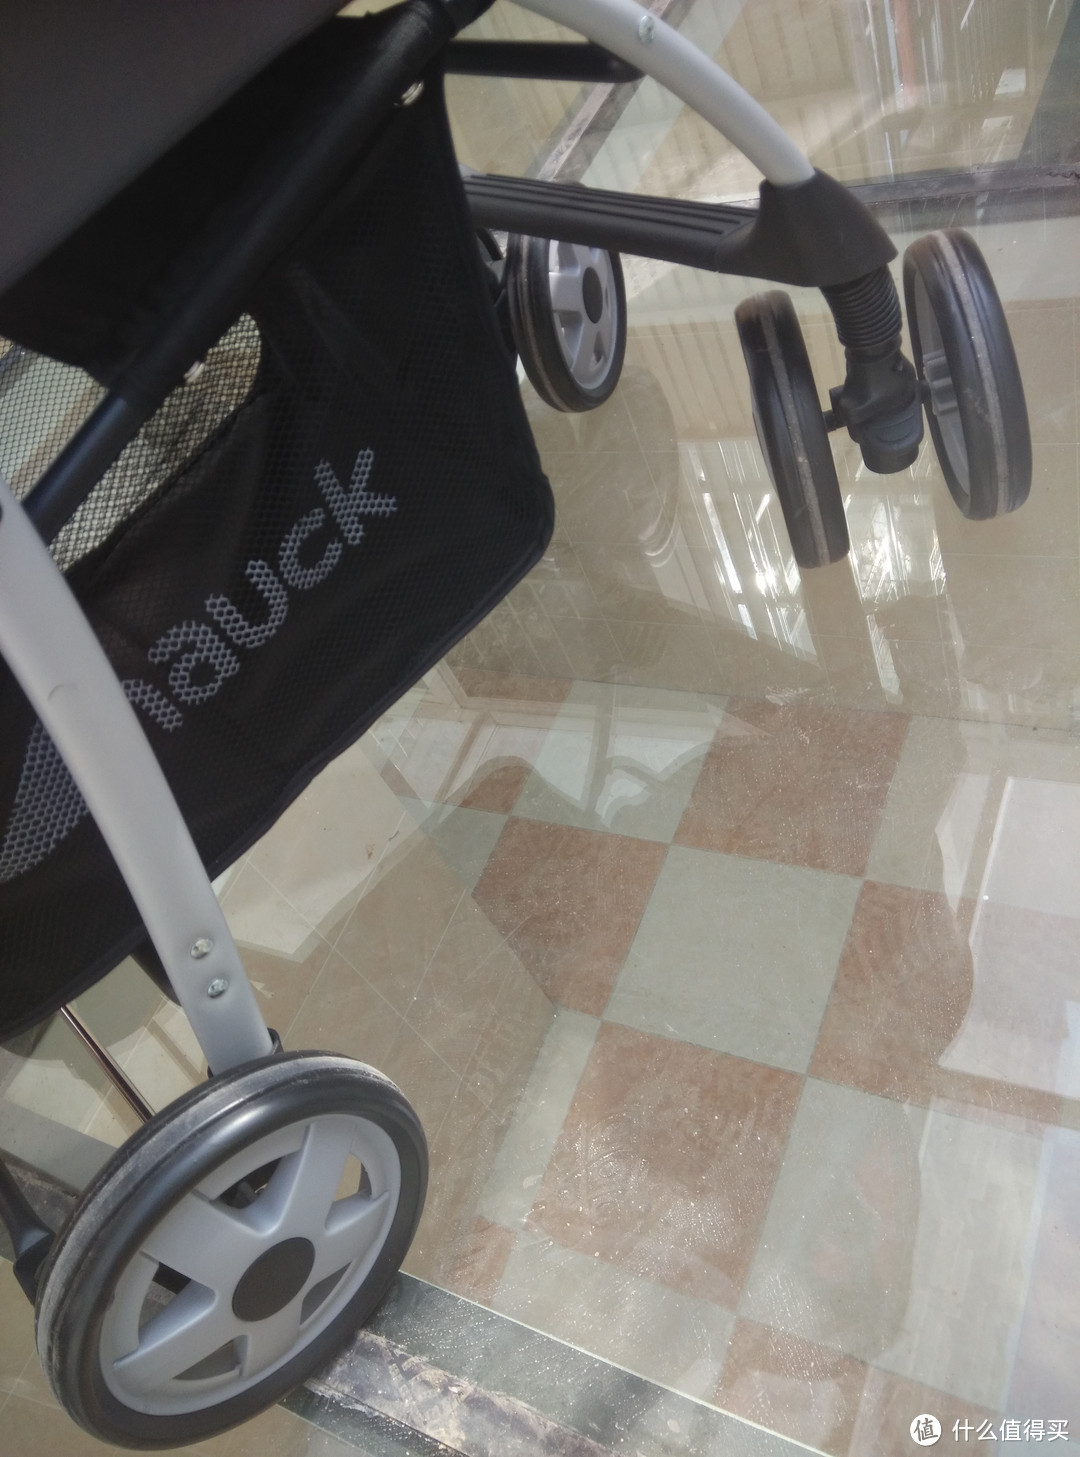 Hauck shopper 三合一婴儿车 推车&睡篮&安全摇篮 三件套